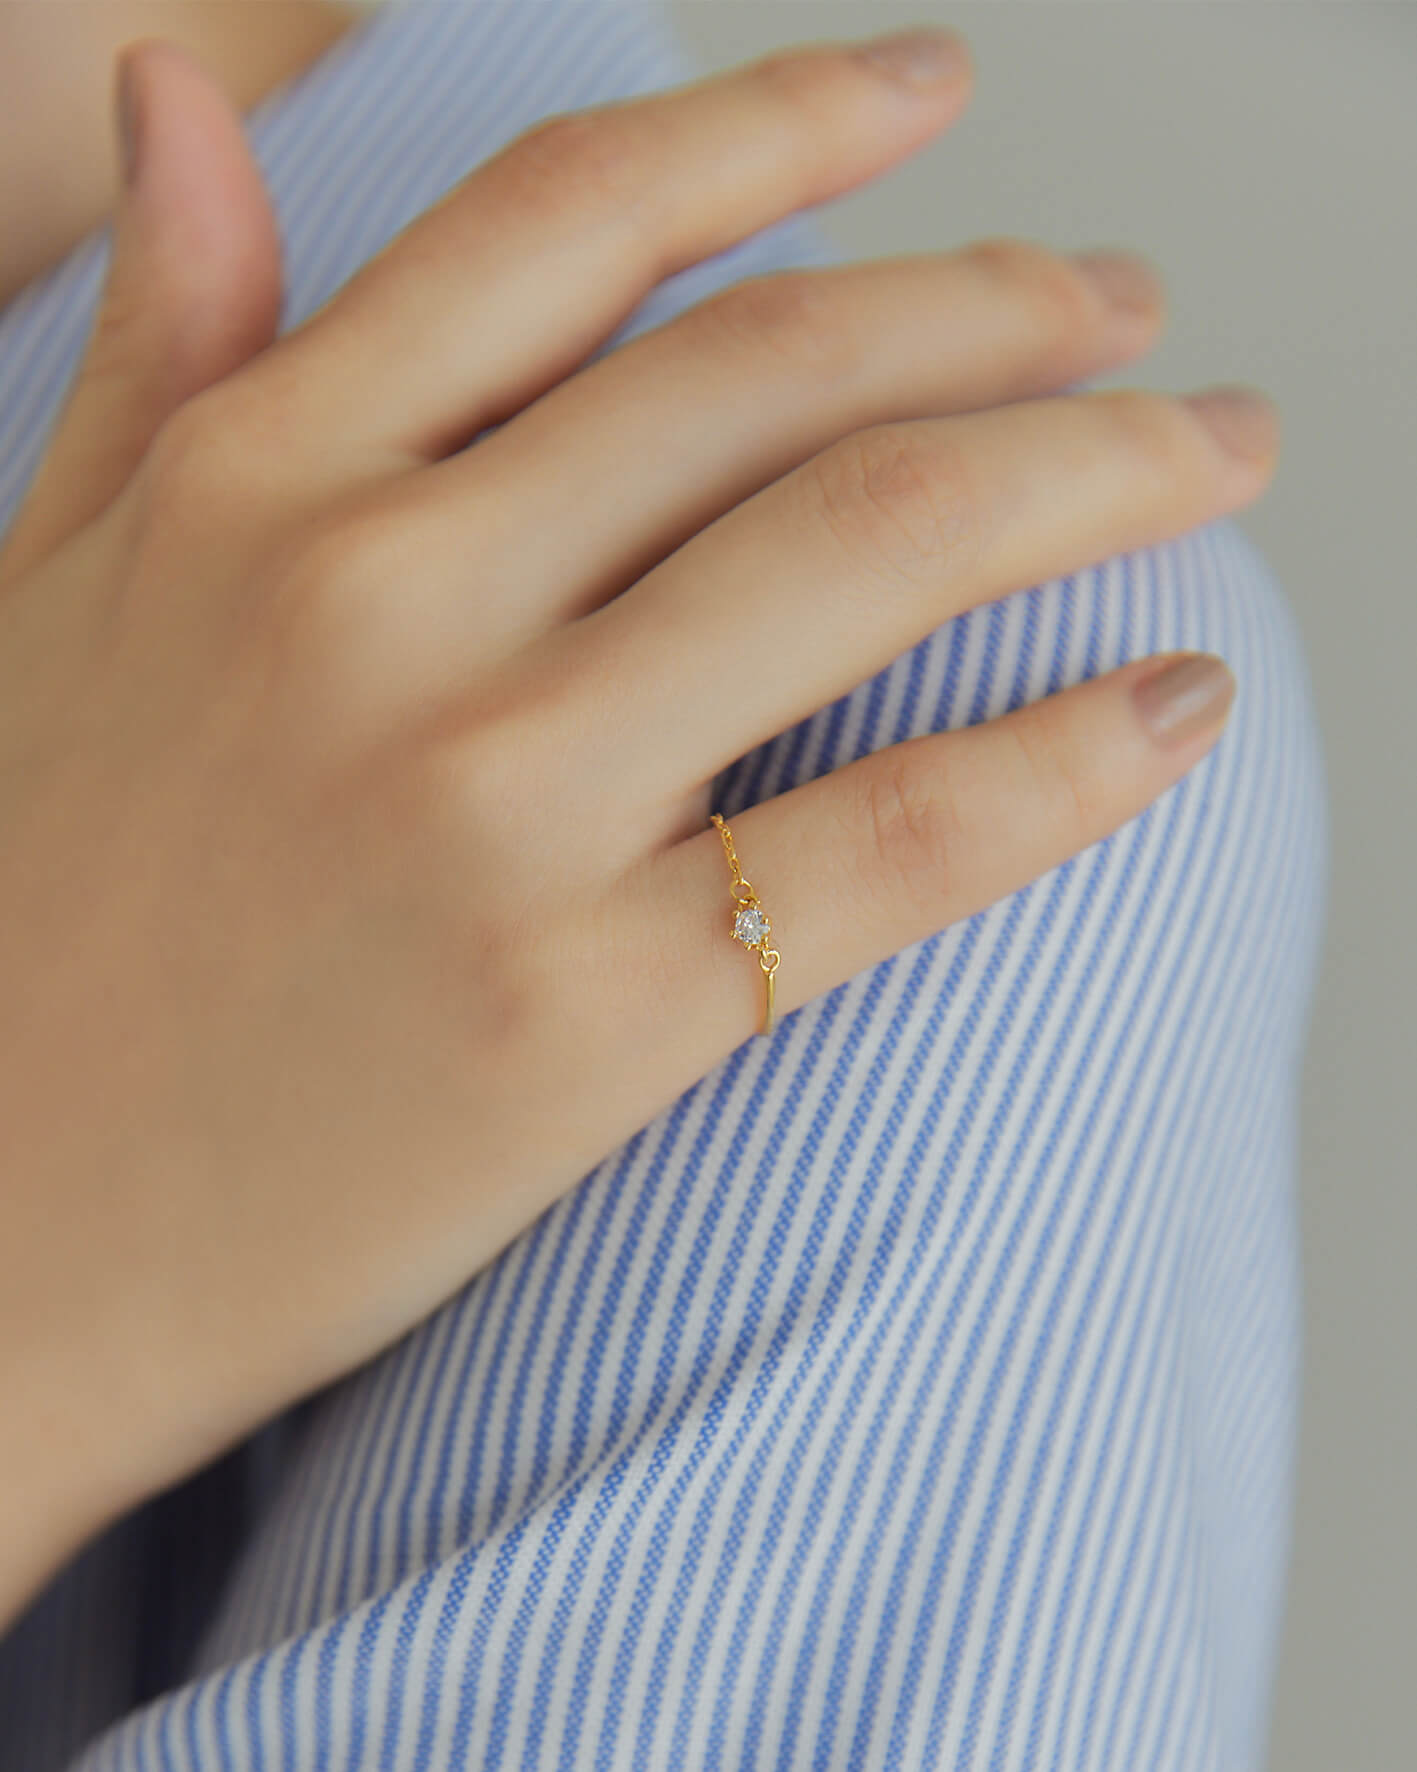 Eco安珂,韓國飾品,韓國戒指,韓國925純銀戒指,925純銀戒指,純銀戒指,純銀鍊戒